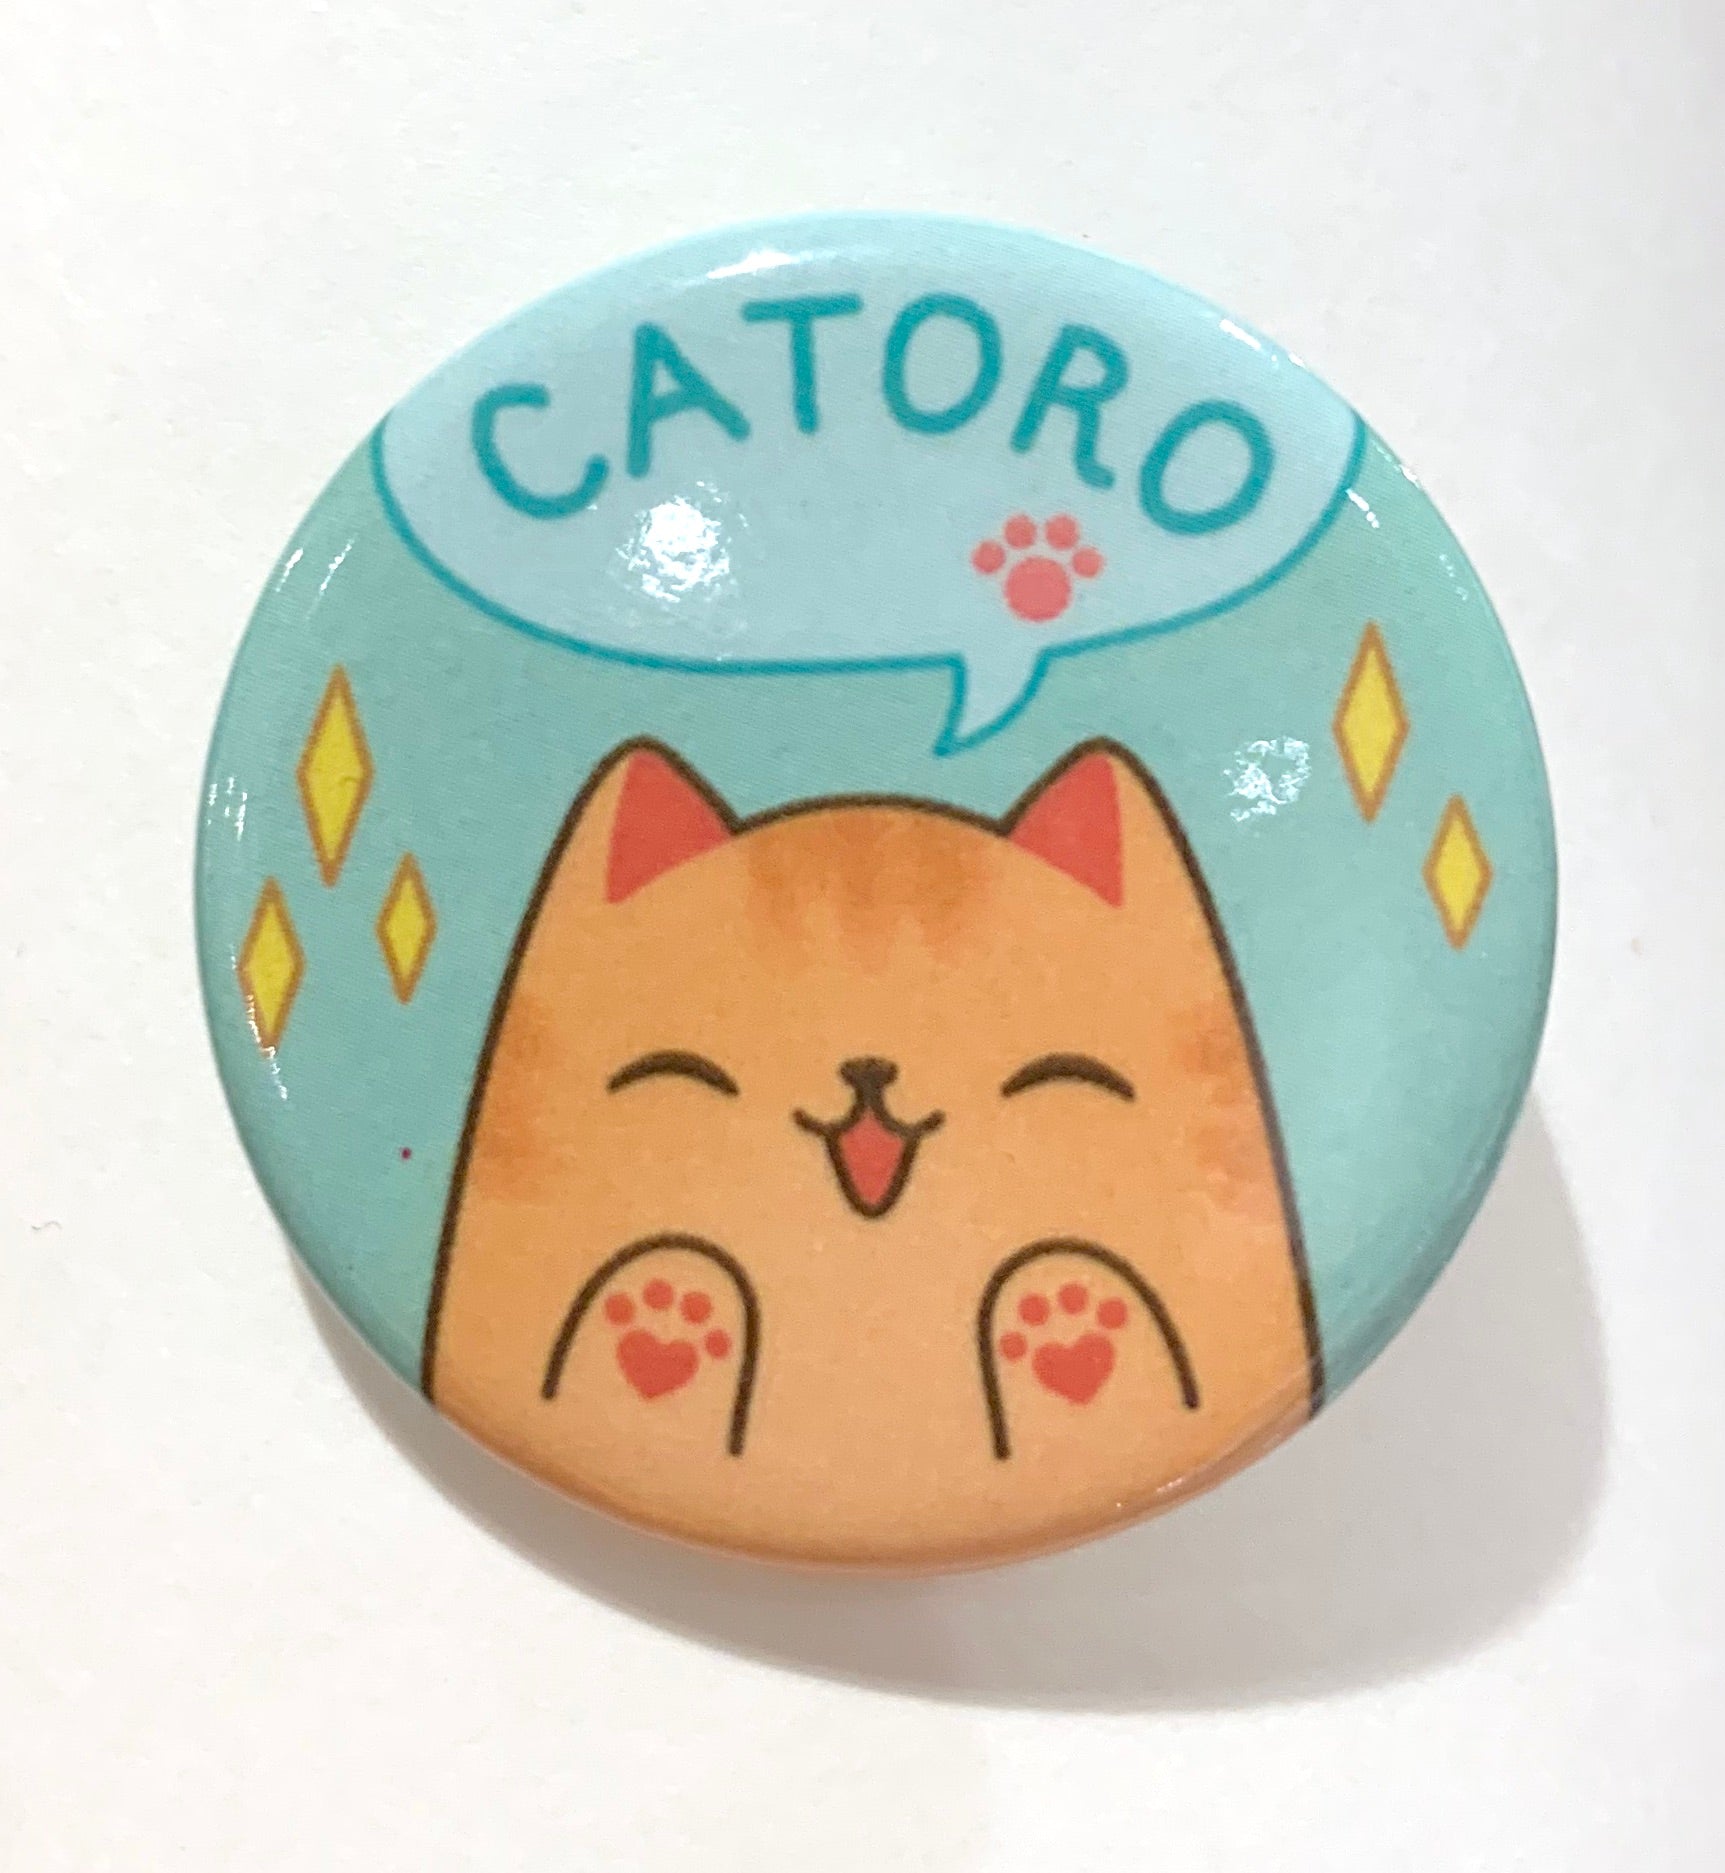 Catoro Button Pins - by Megchan Doodles - Catoro